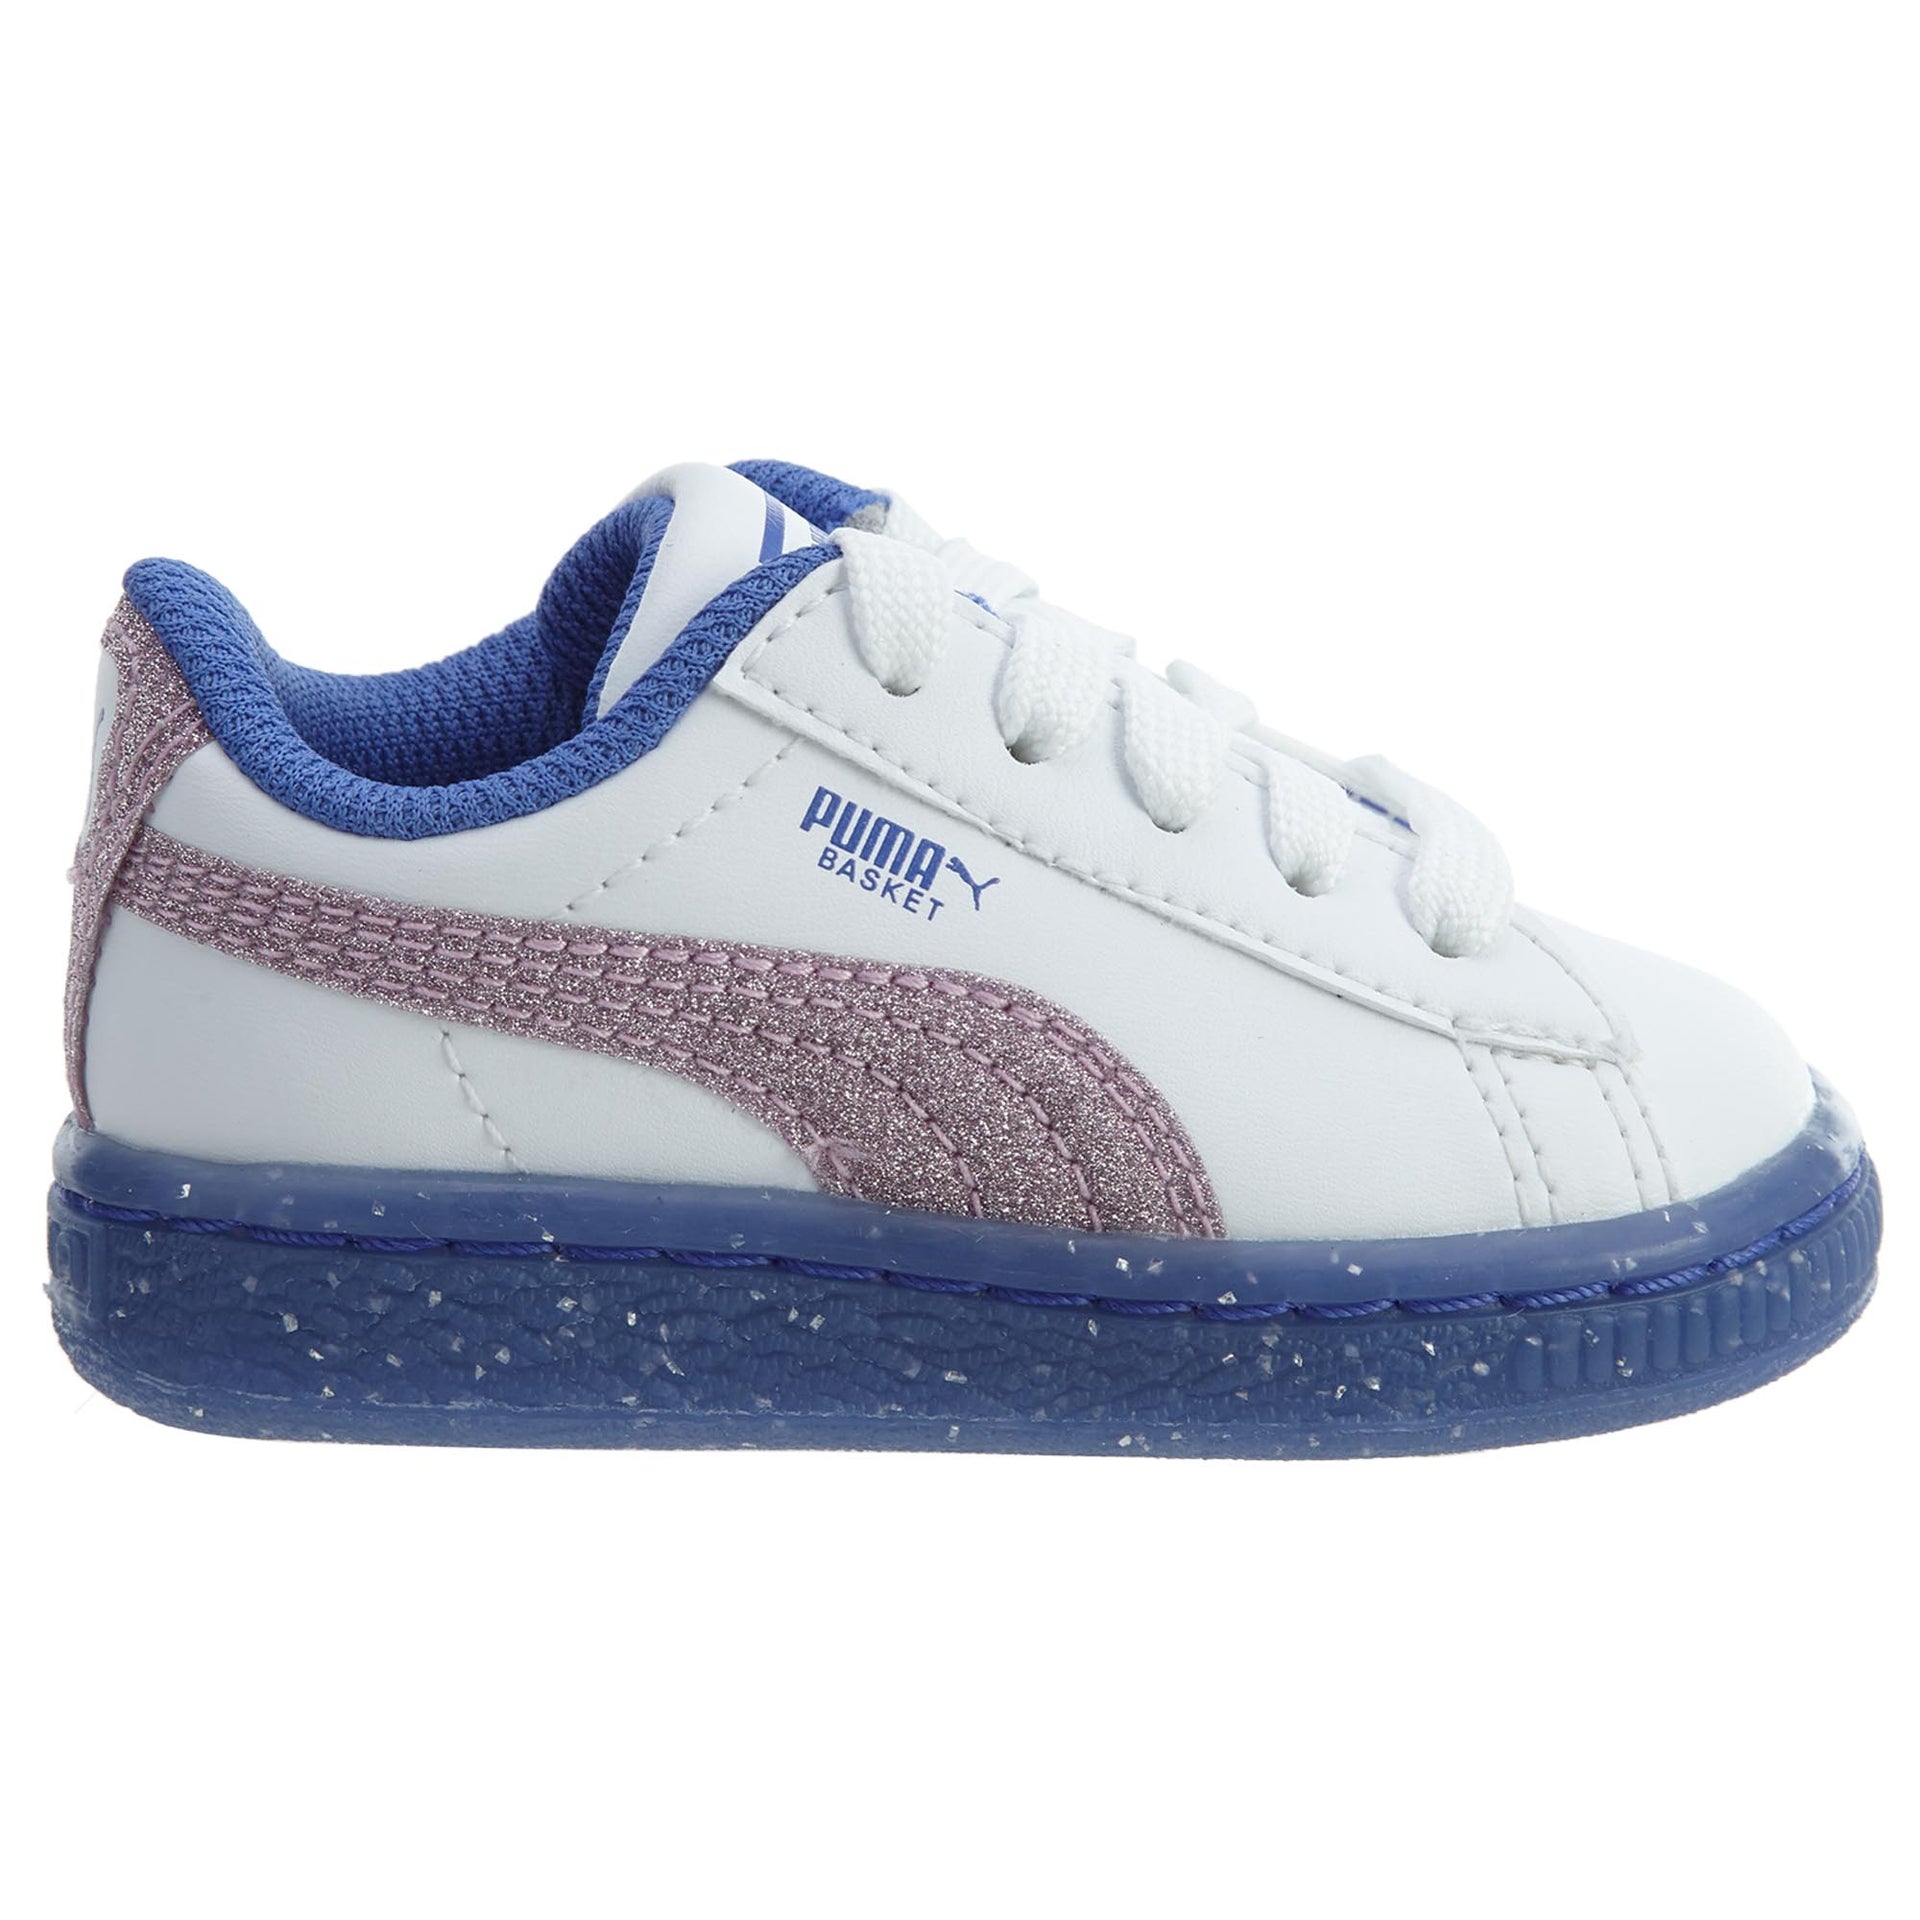 Puma Basket Iced Glitter 2 Infant Girls Shoe Toddlers Style : 363898